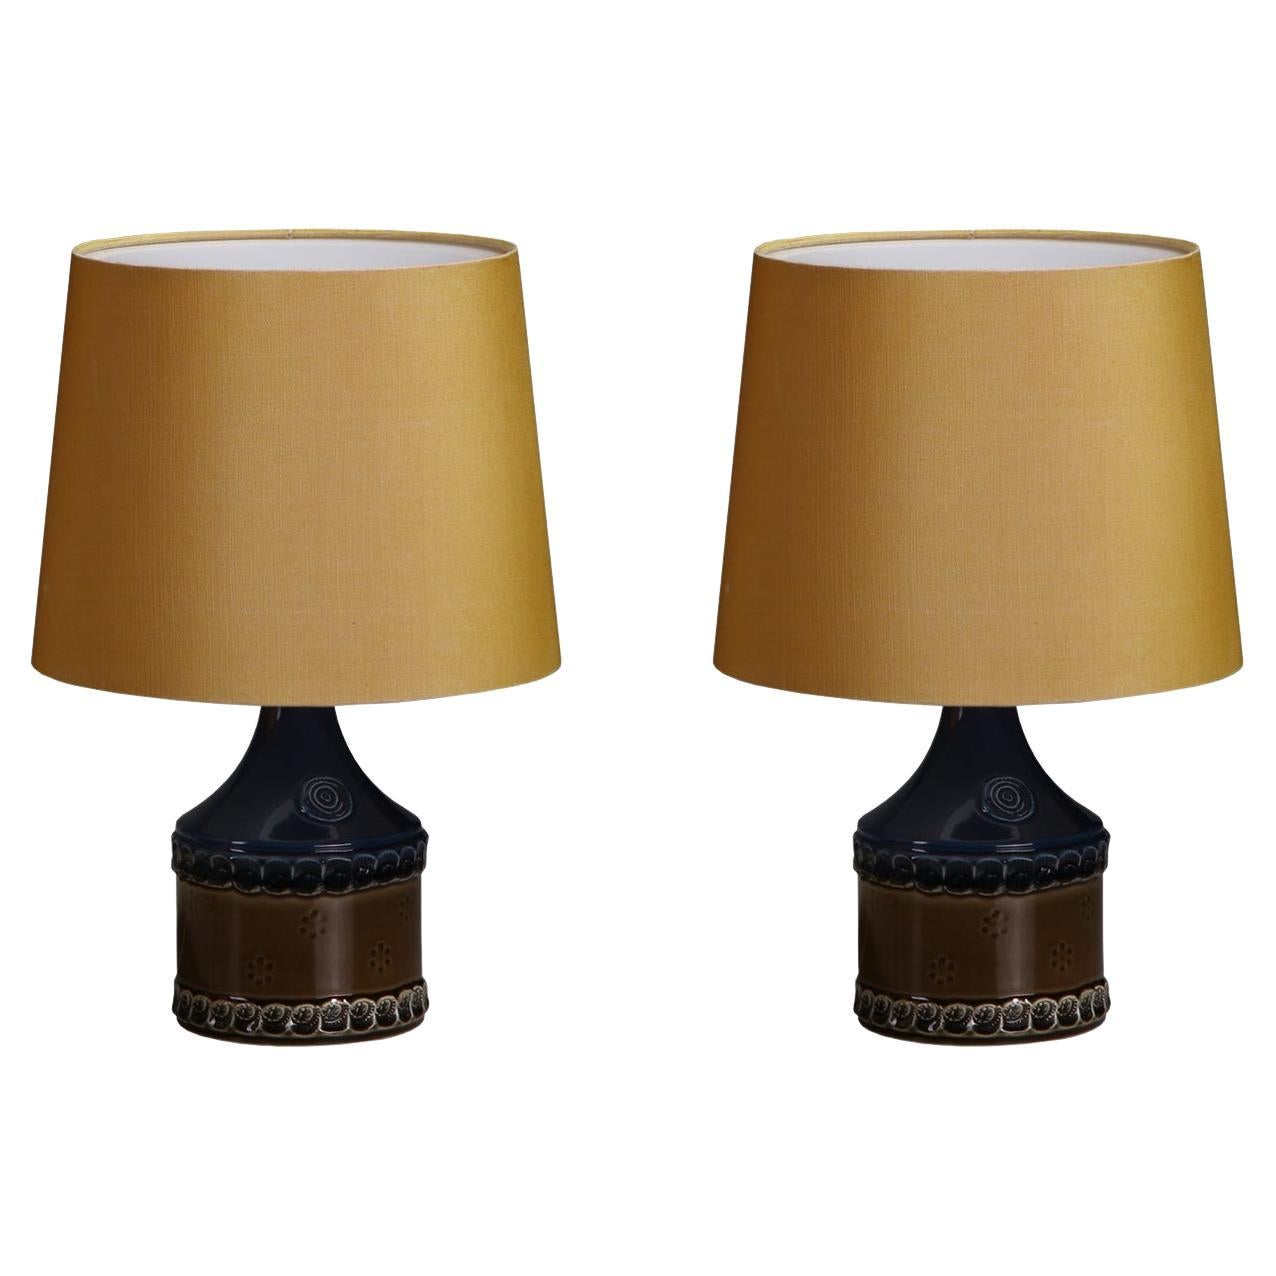 Bjørn Wiinblad for Rosenthal Pair of Table Lamps in Porcelain, 1960s For Sale